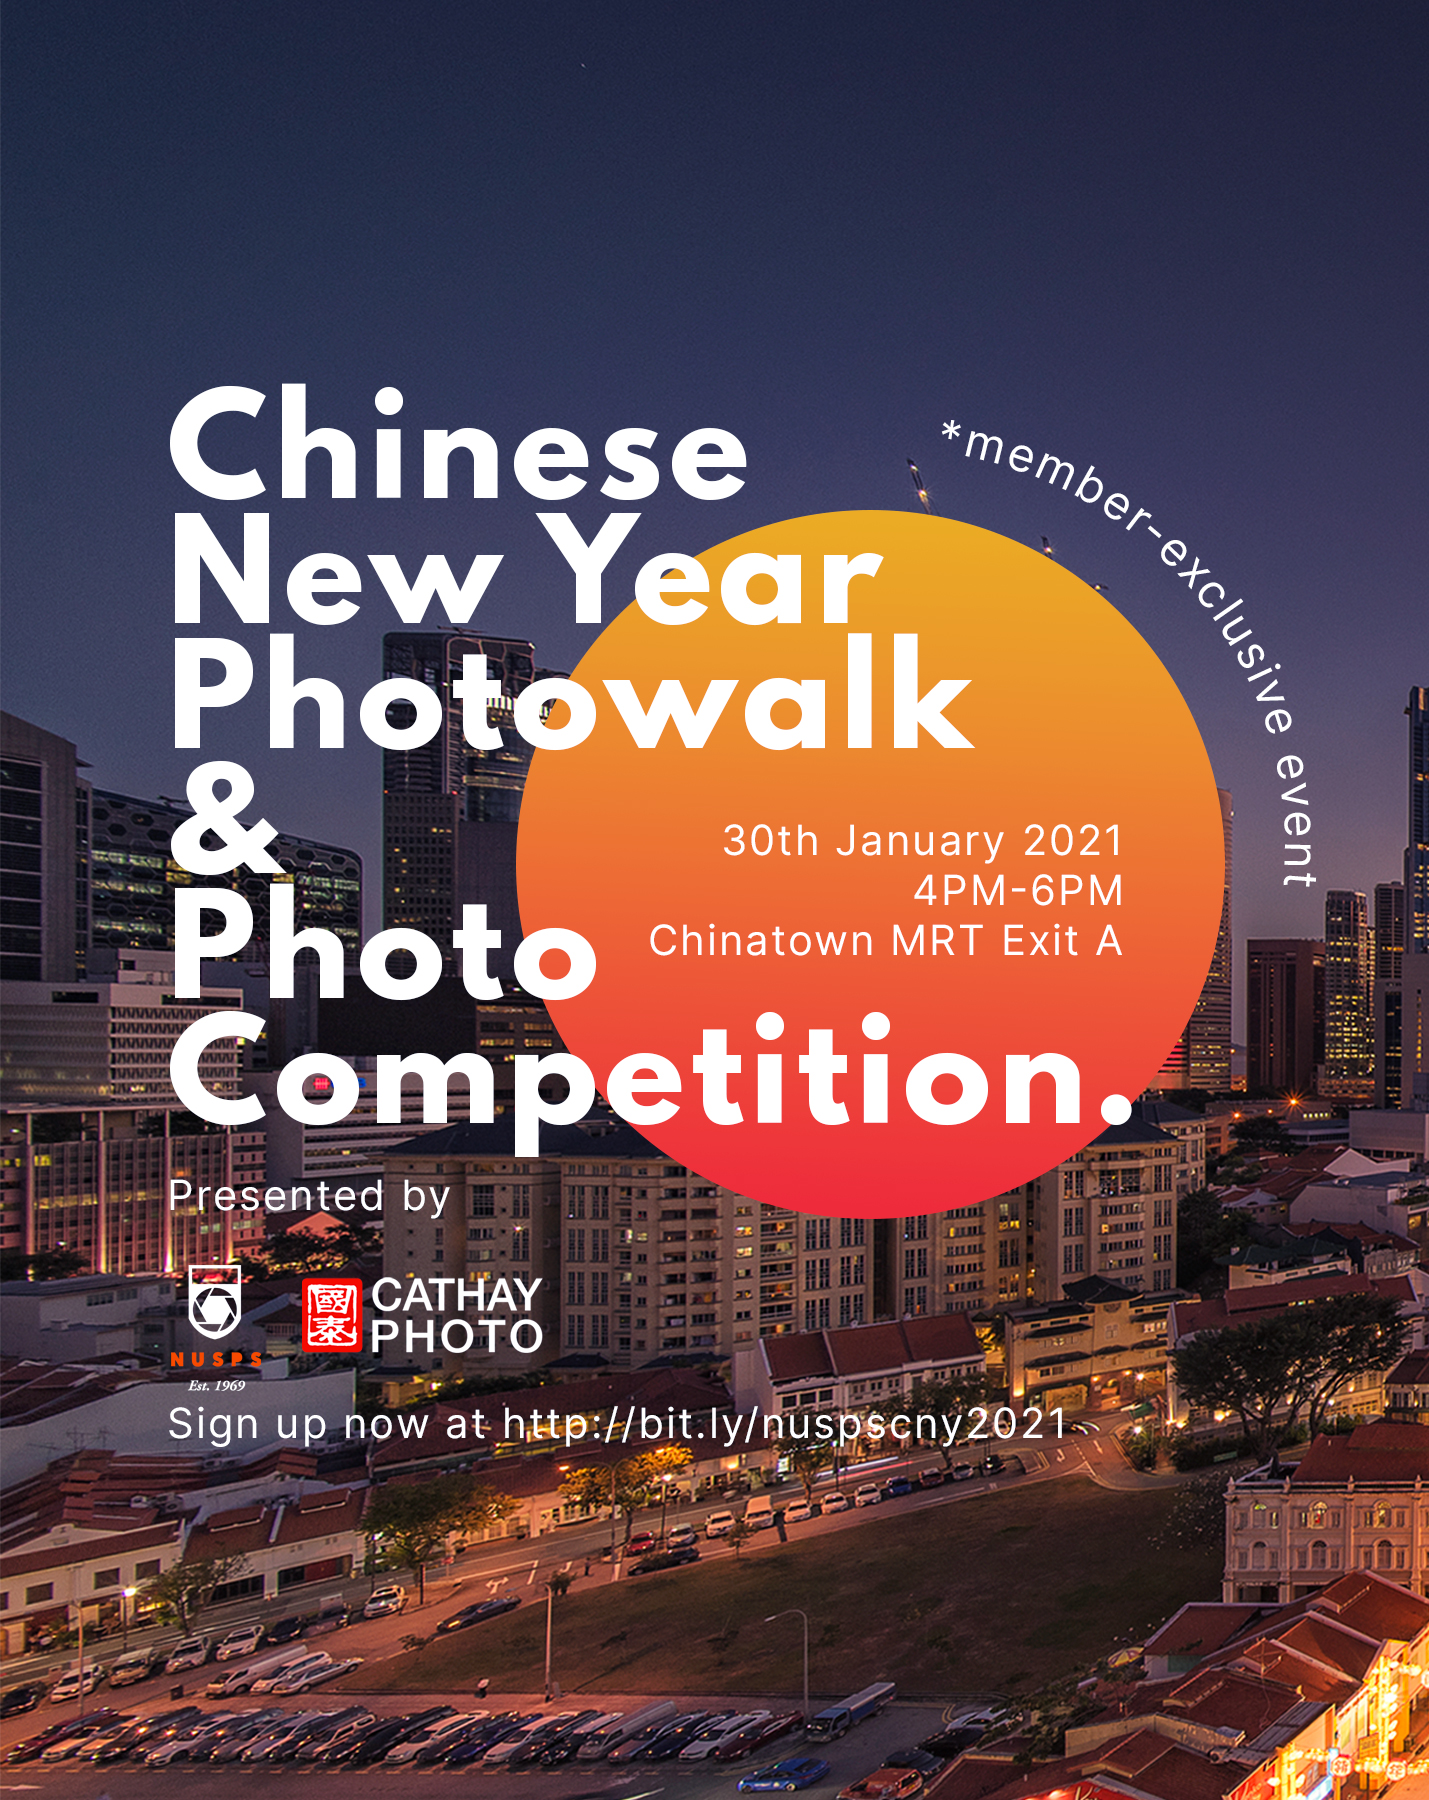 Chinese New Year Photowalk & Photo Competition 2021